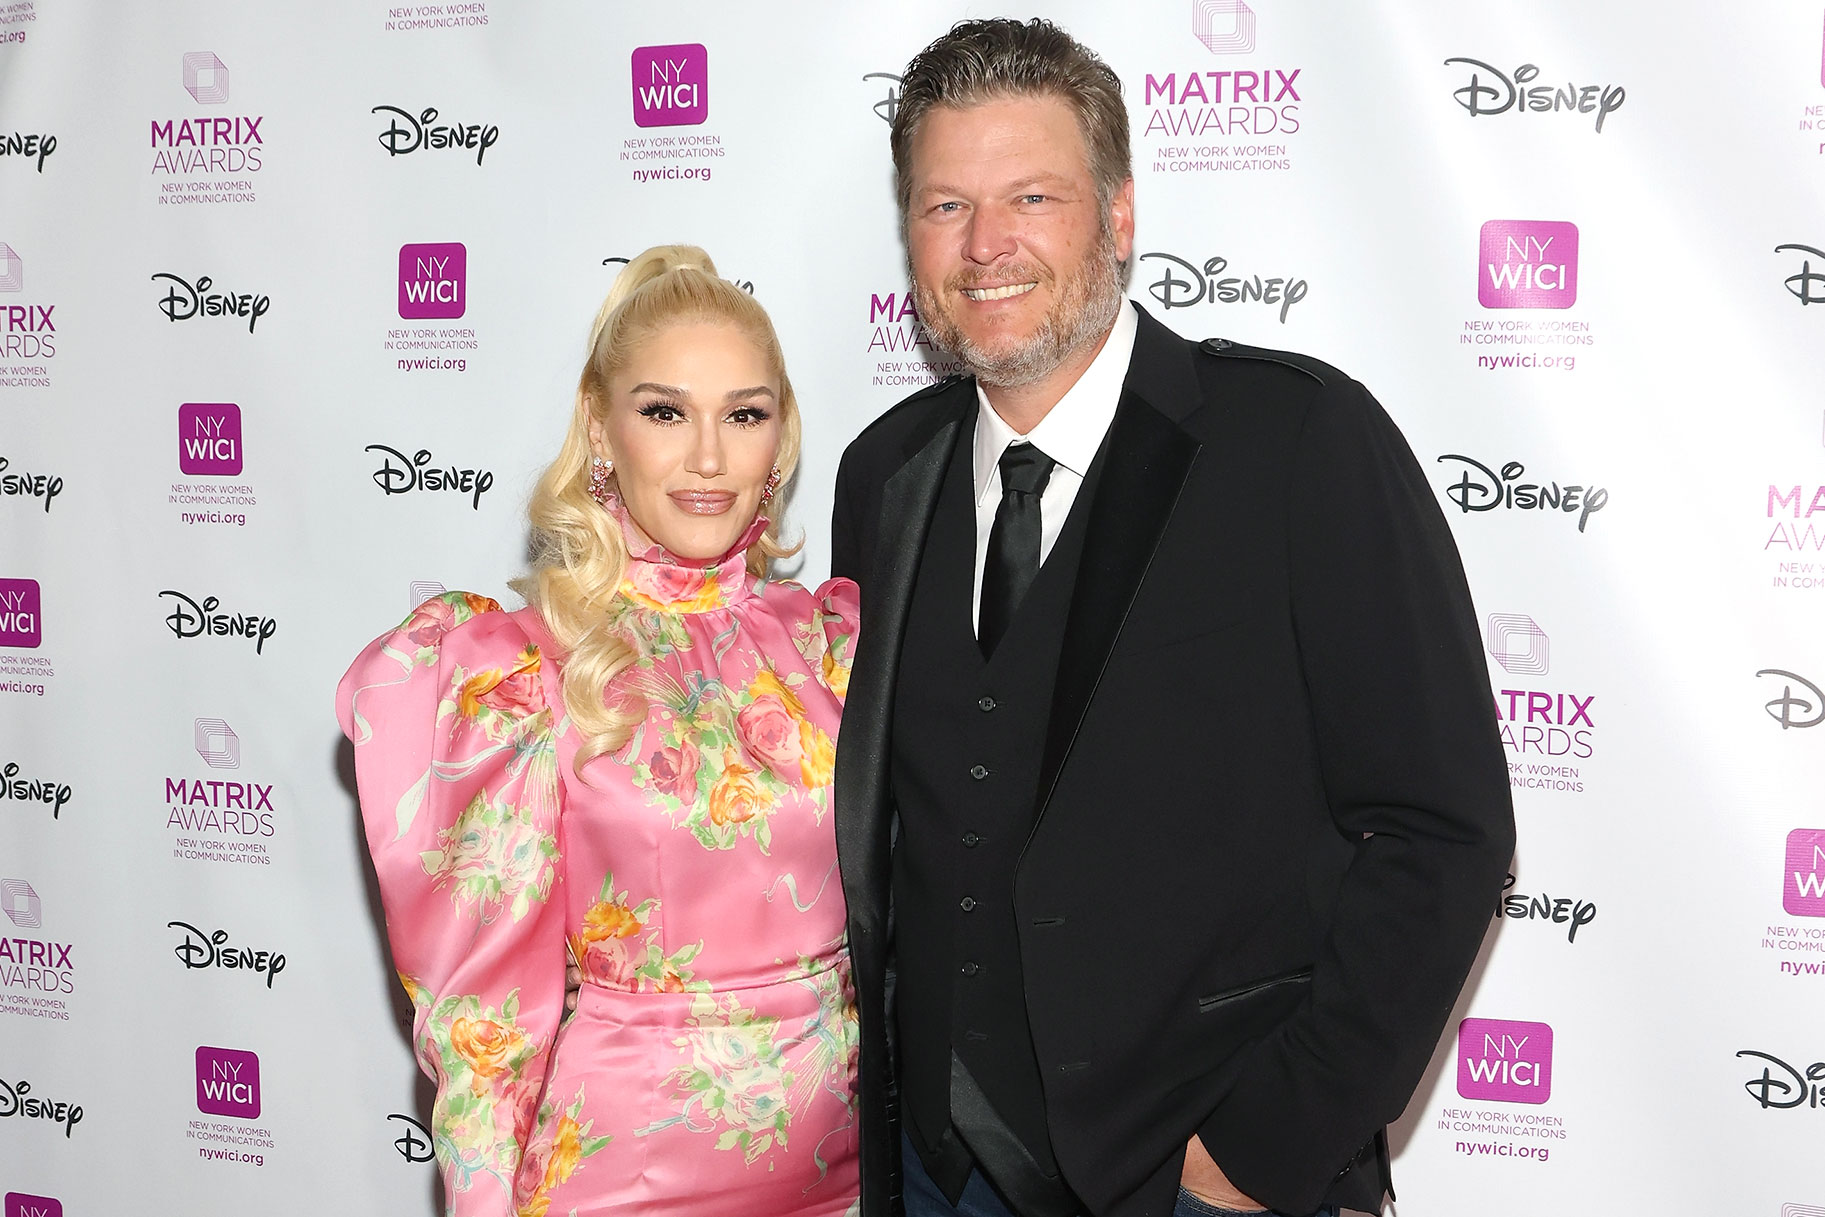 Gwen Stefani and Blake Shelton attend the Matrix Awards